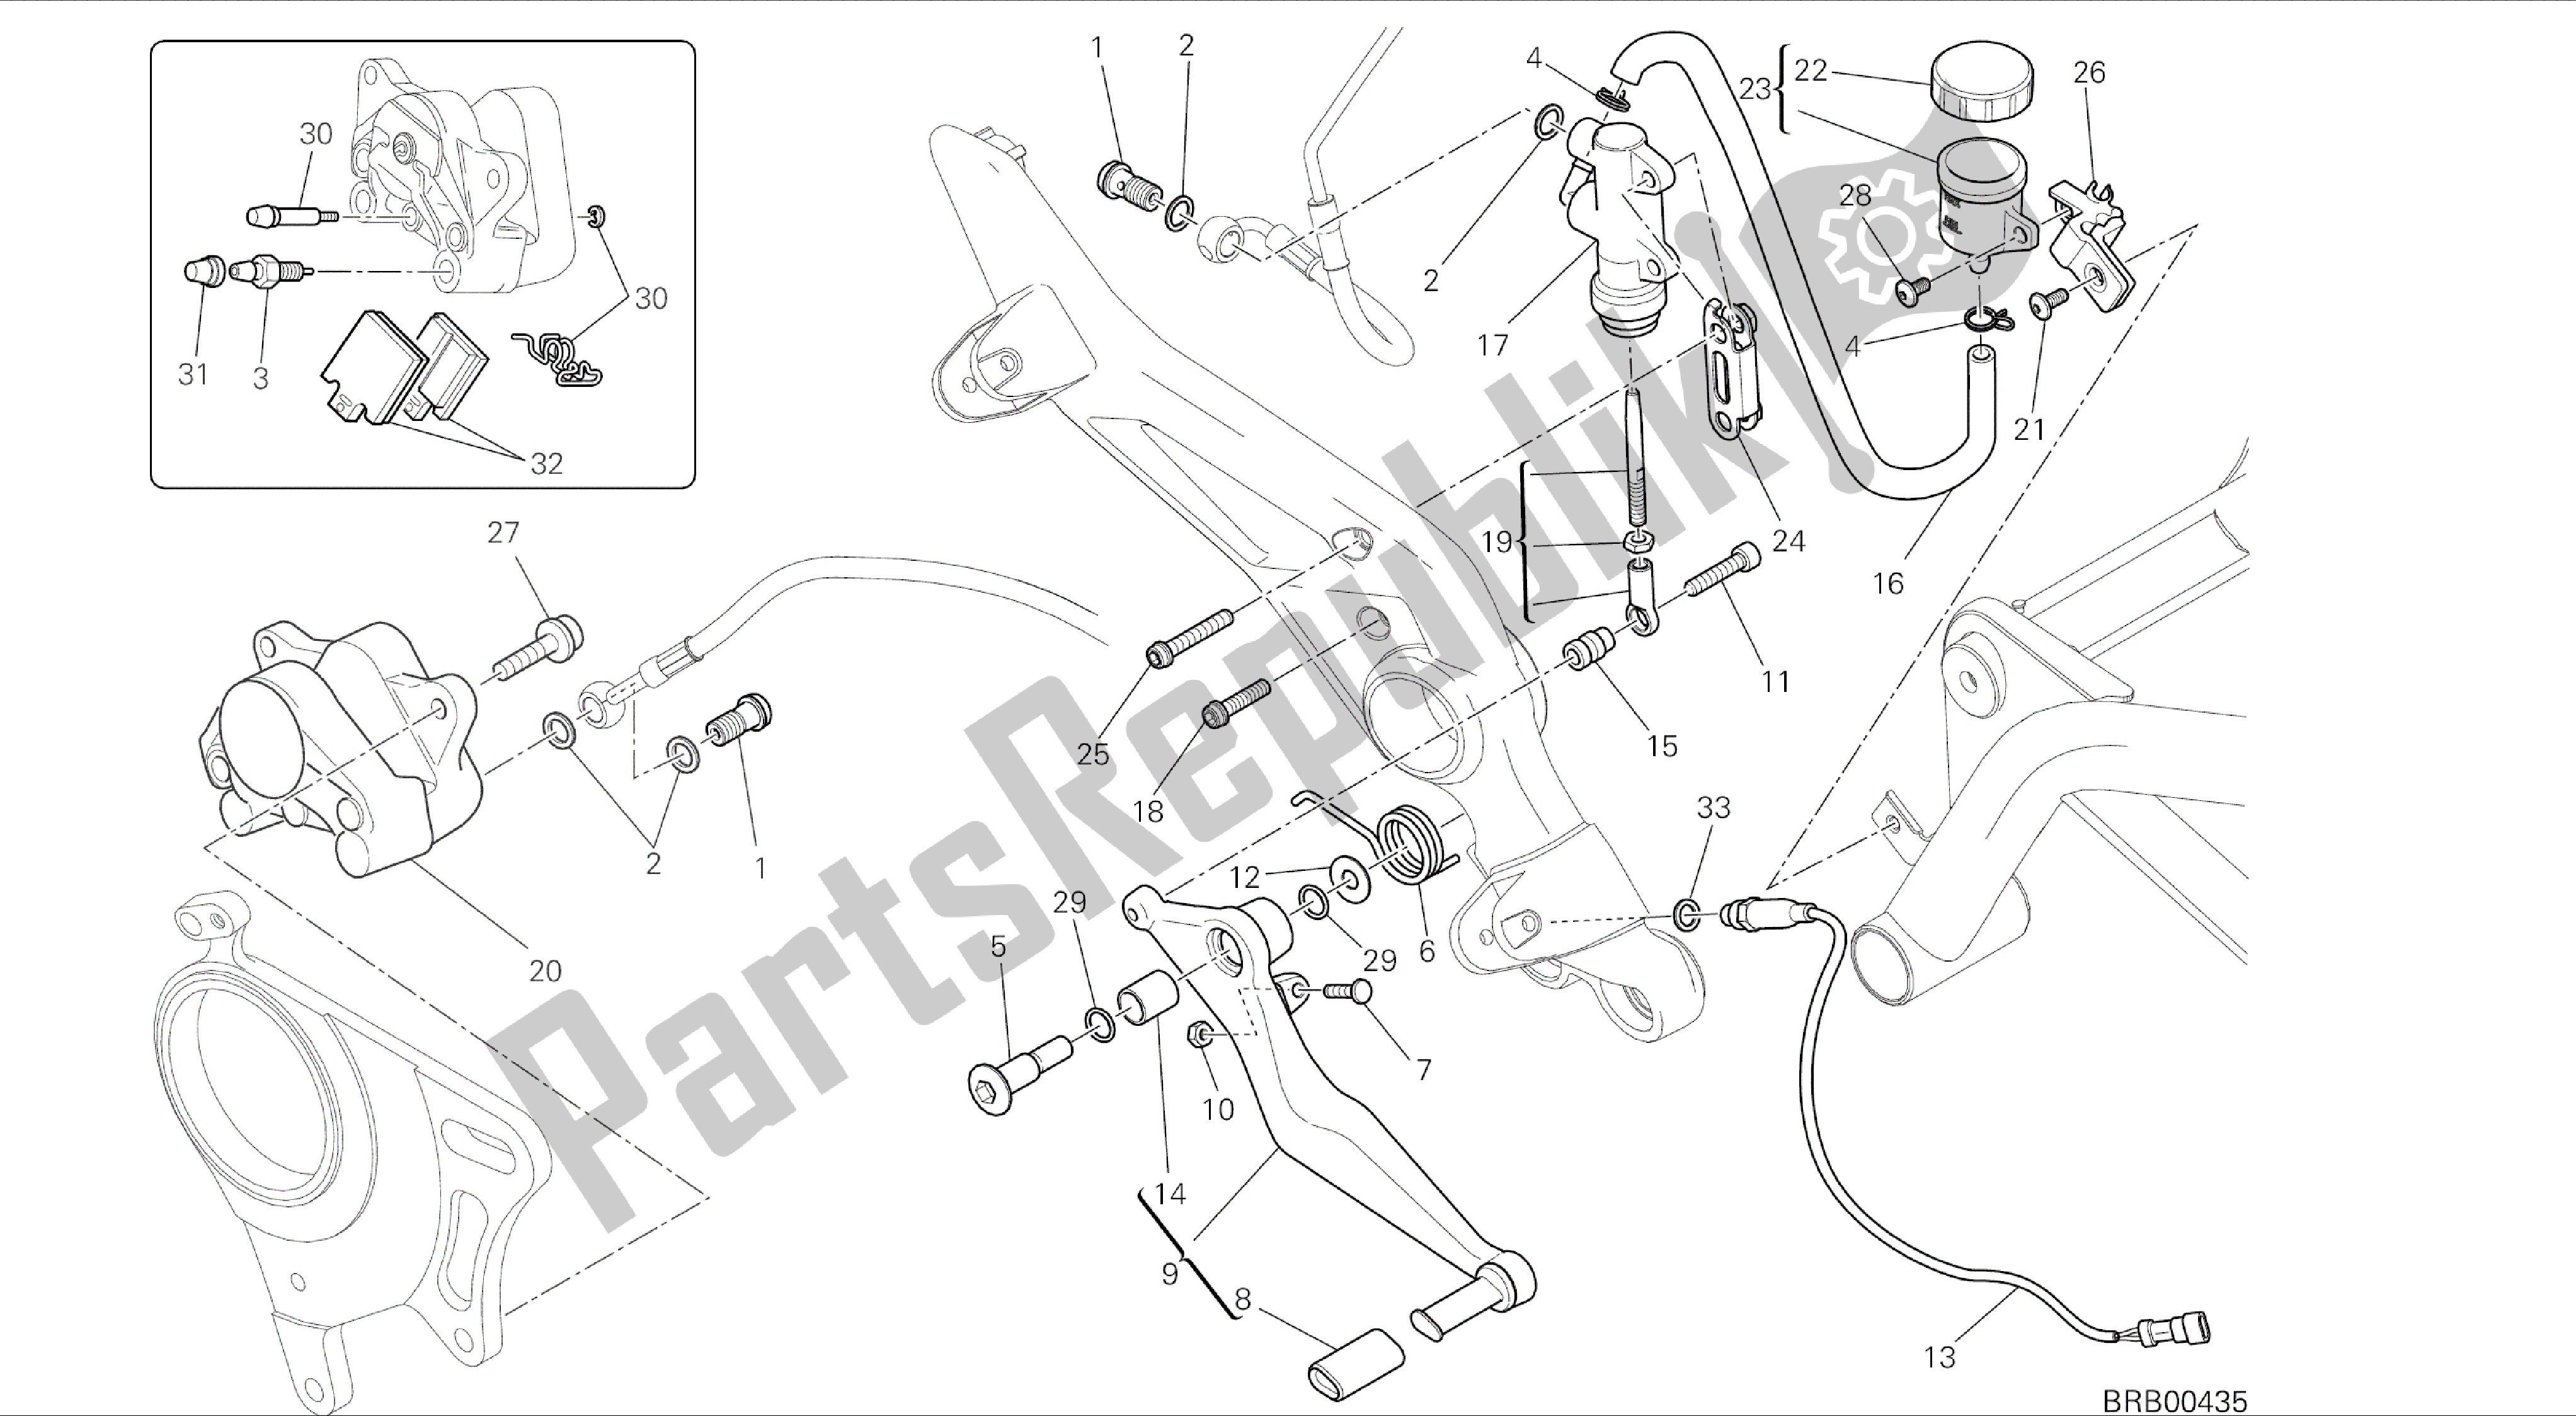 Alle onderdelen voor de Tekening 025 - Achterremsysteem [mod: Hym; Xst: Aus, Chn, Eur, Fra, Jap, Tha, Twn] Groepsframe van de Ducati Hypermotard 821 2014